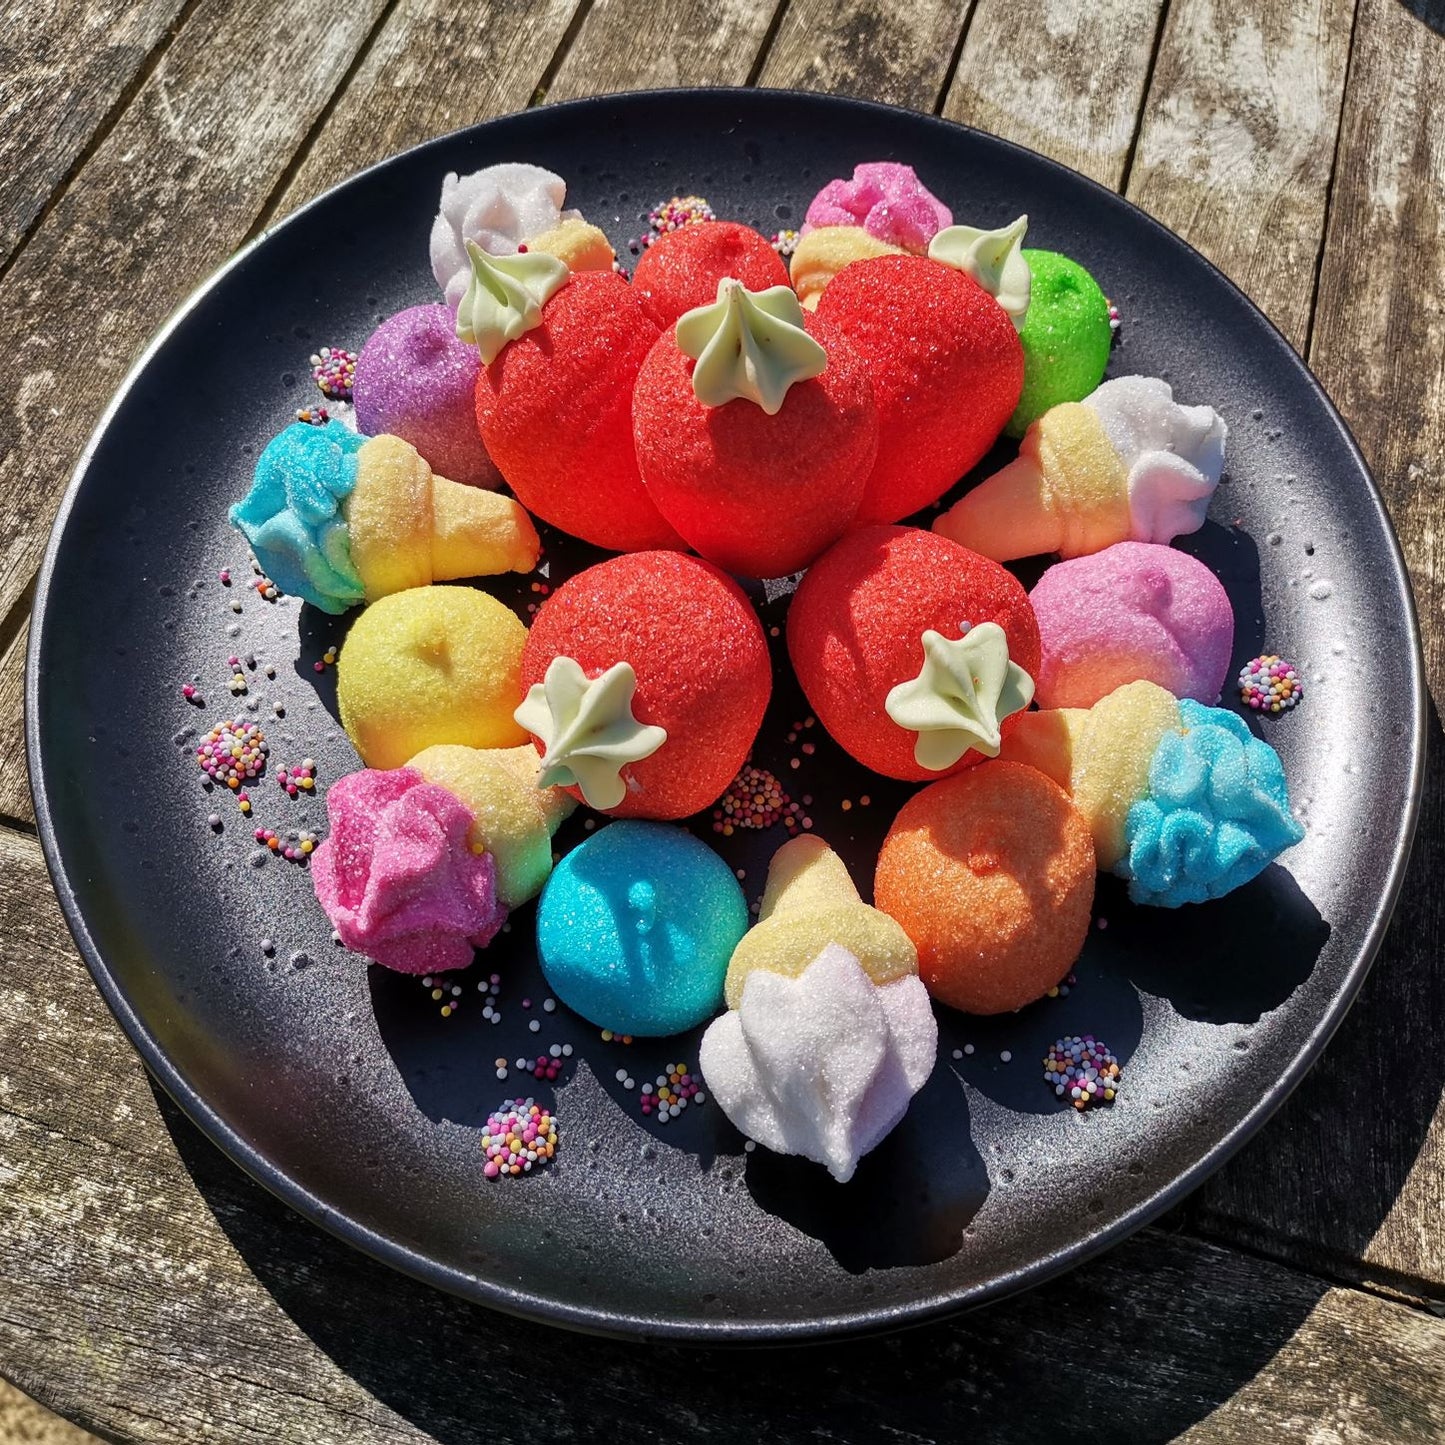 Strawberry Flavoured 3D Fruit Shape Marshmallow Gift Box, 180g